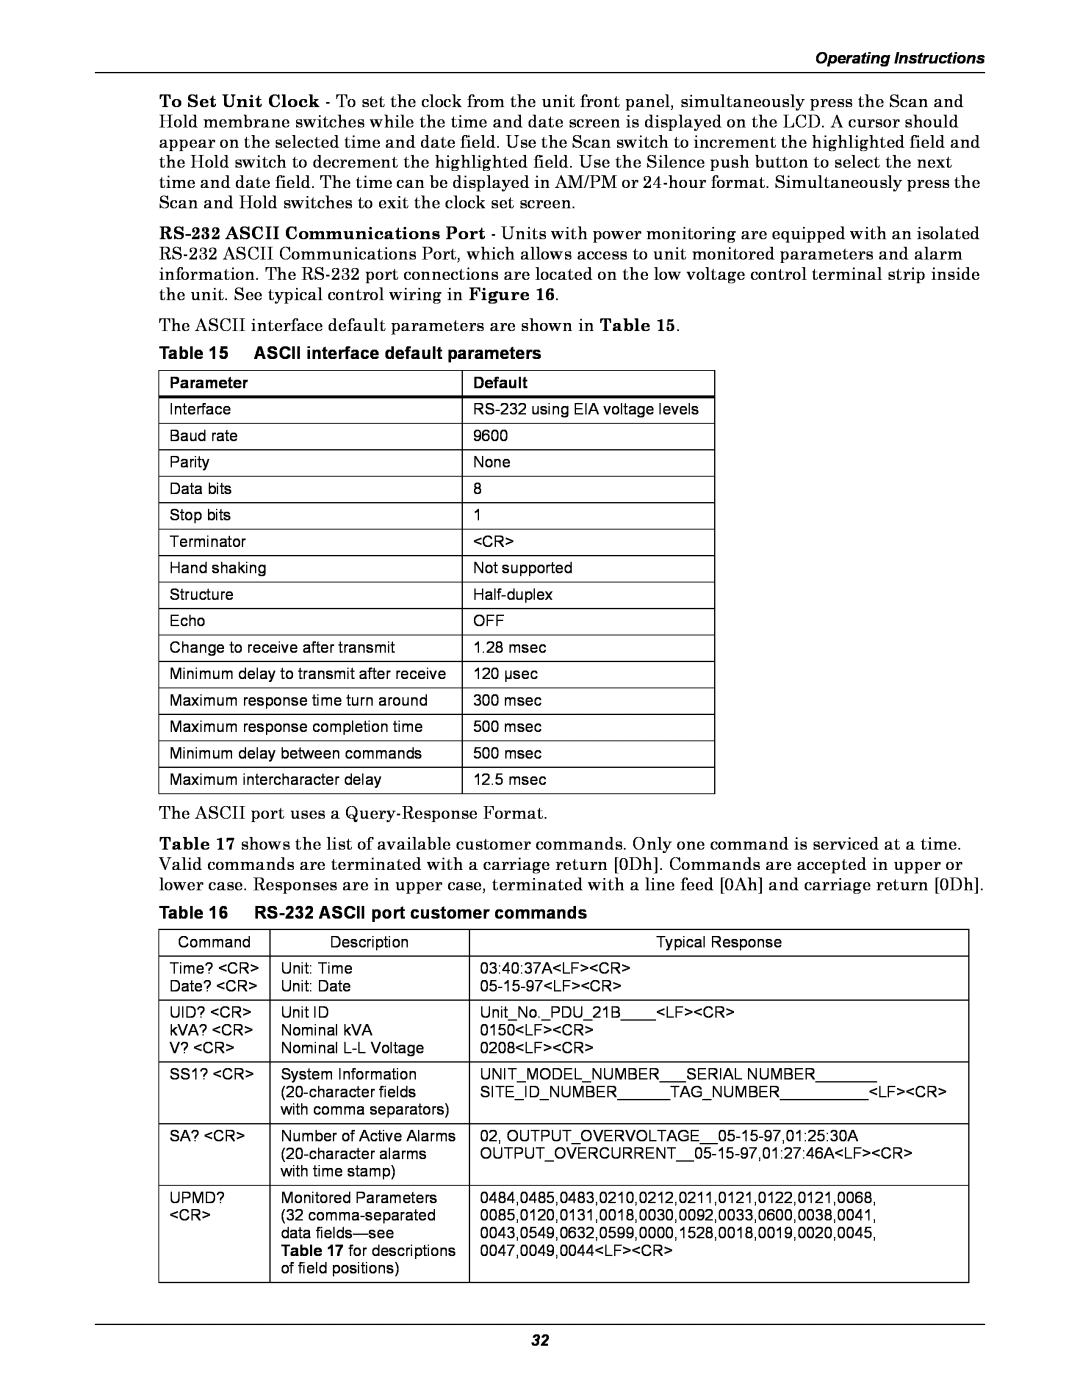 Emerson FPC user manual ASCII interface default parameters, RS-232 ASCII port customer commands 